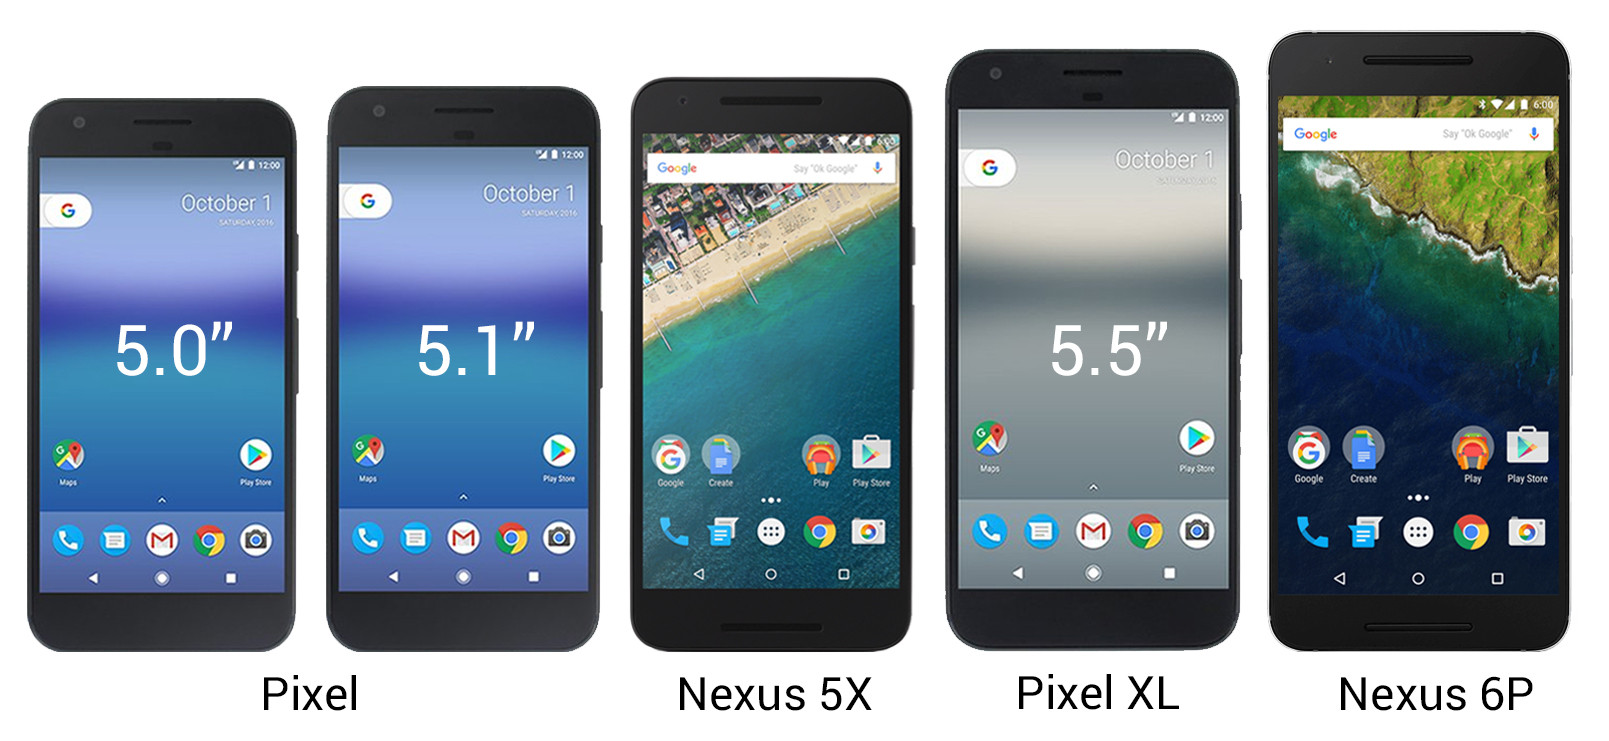 huawei nexus 6p vs google pixel